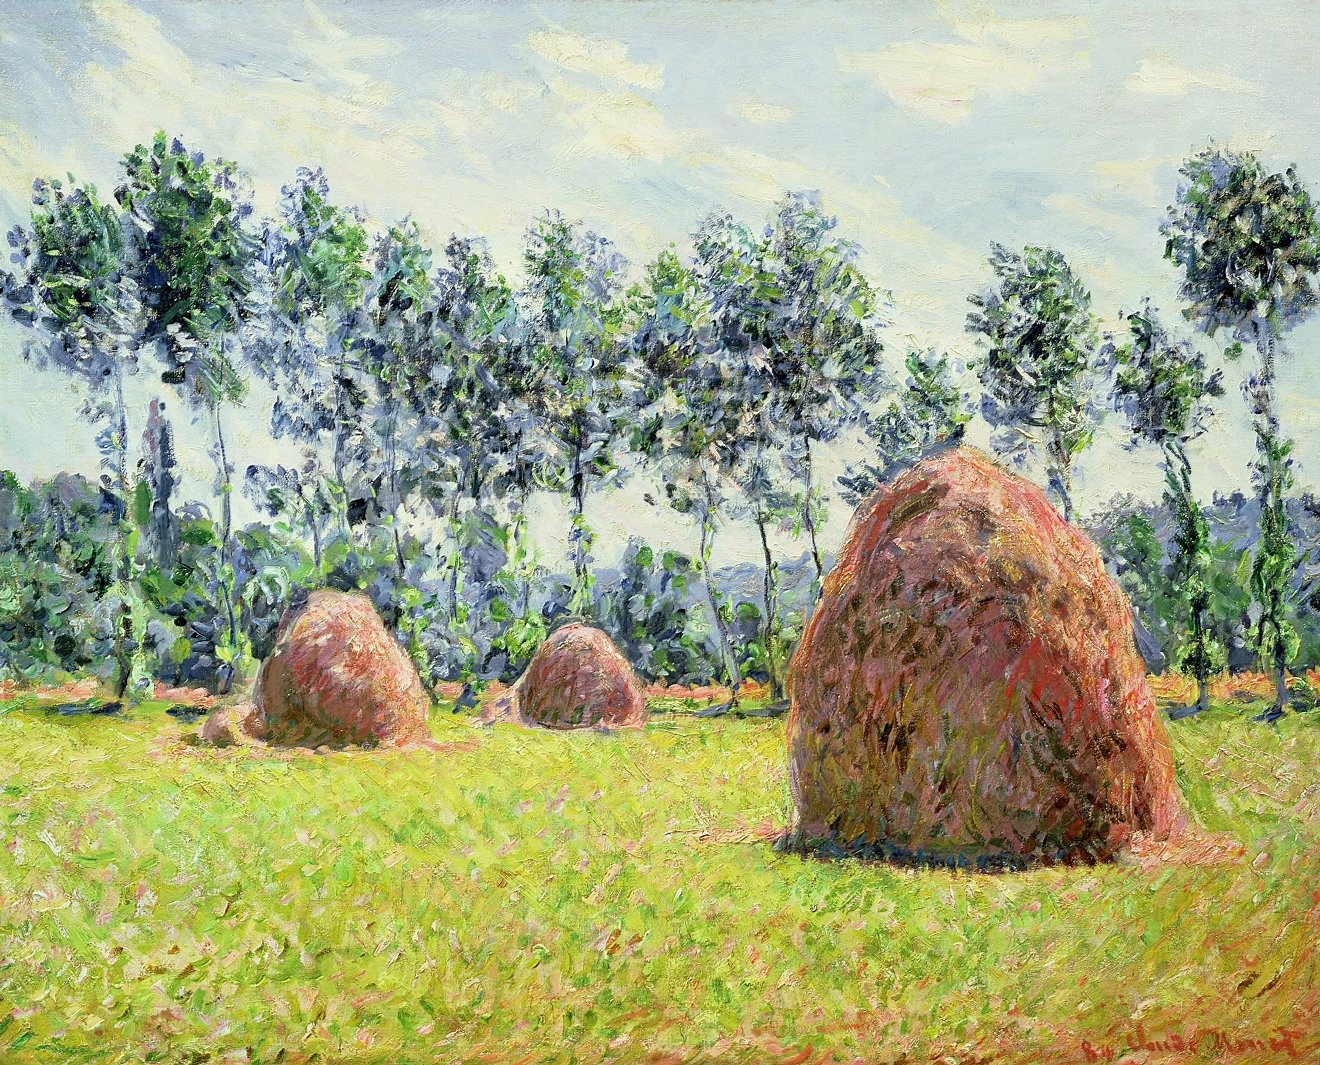 Claude+Monet-1840-1926 (290).jpg